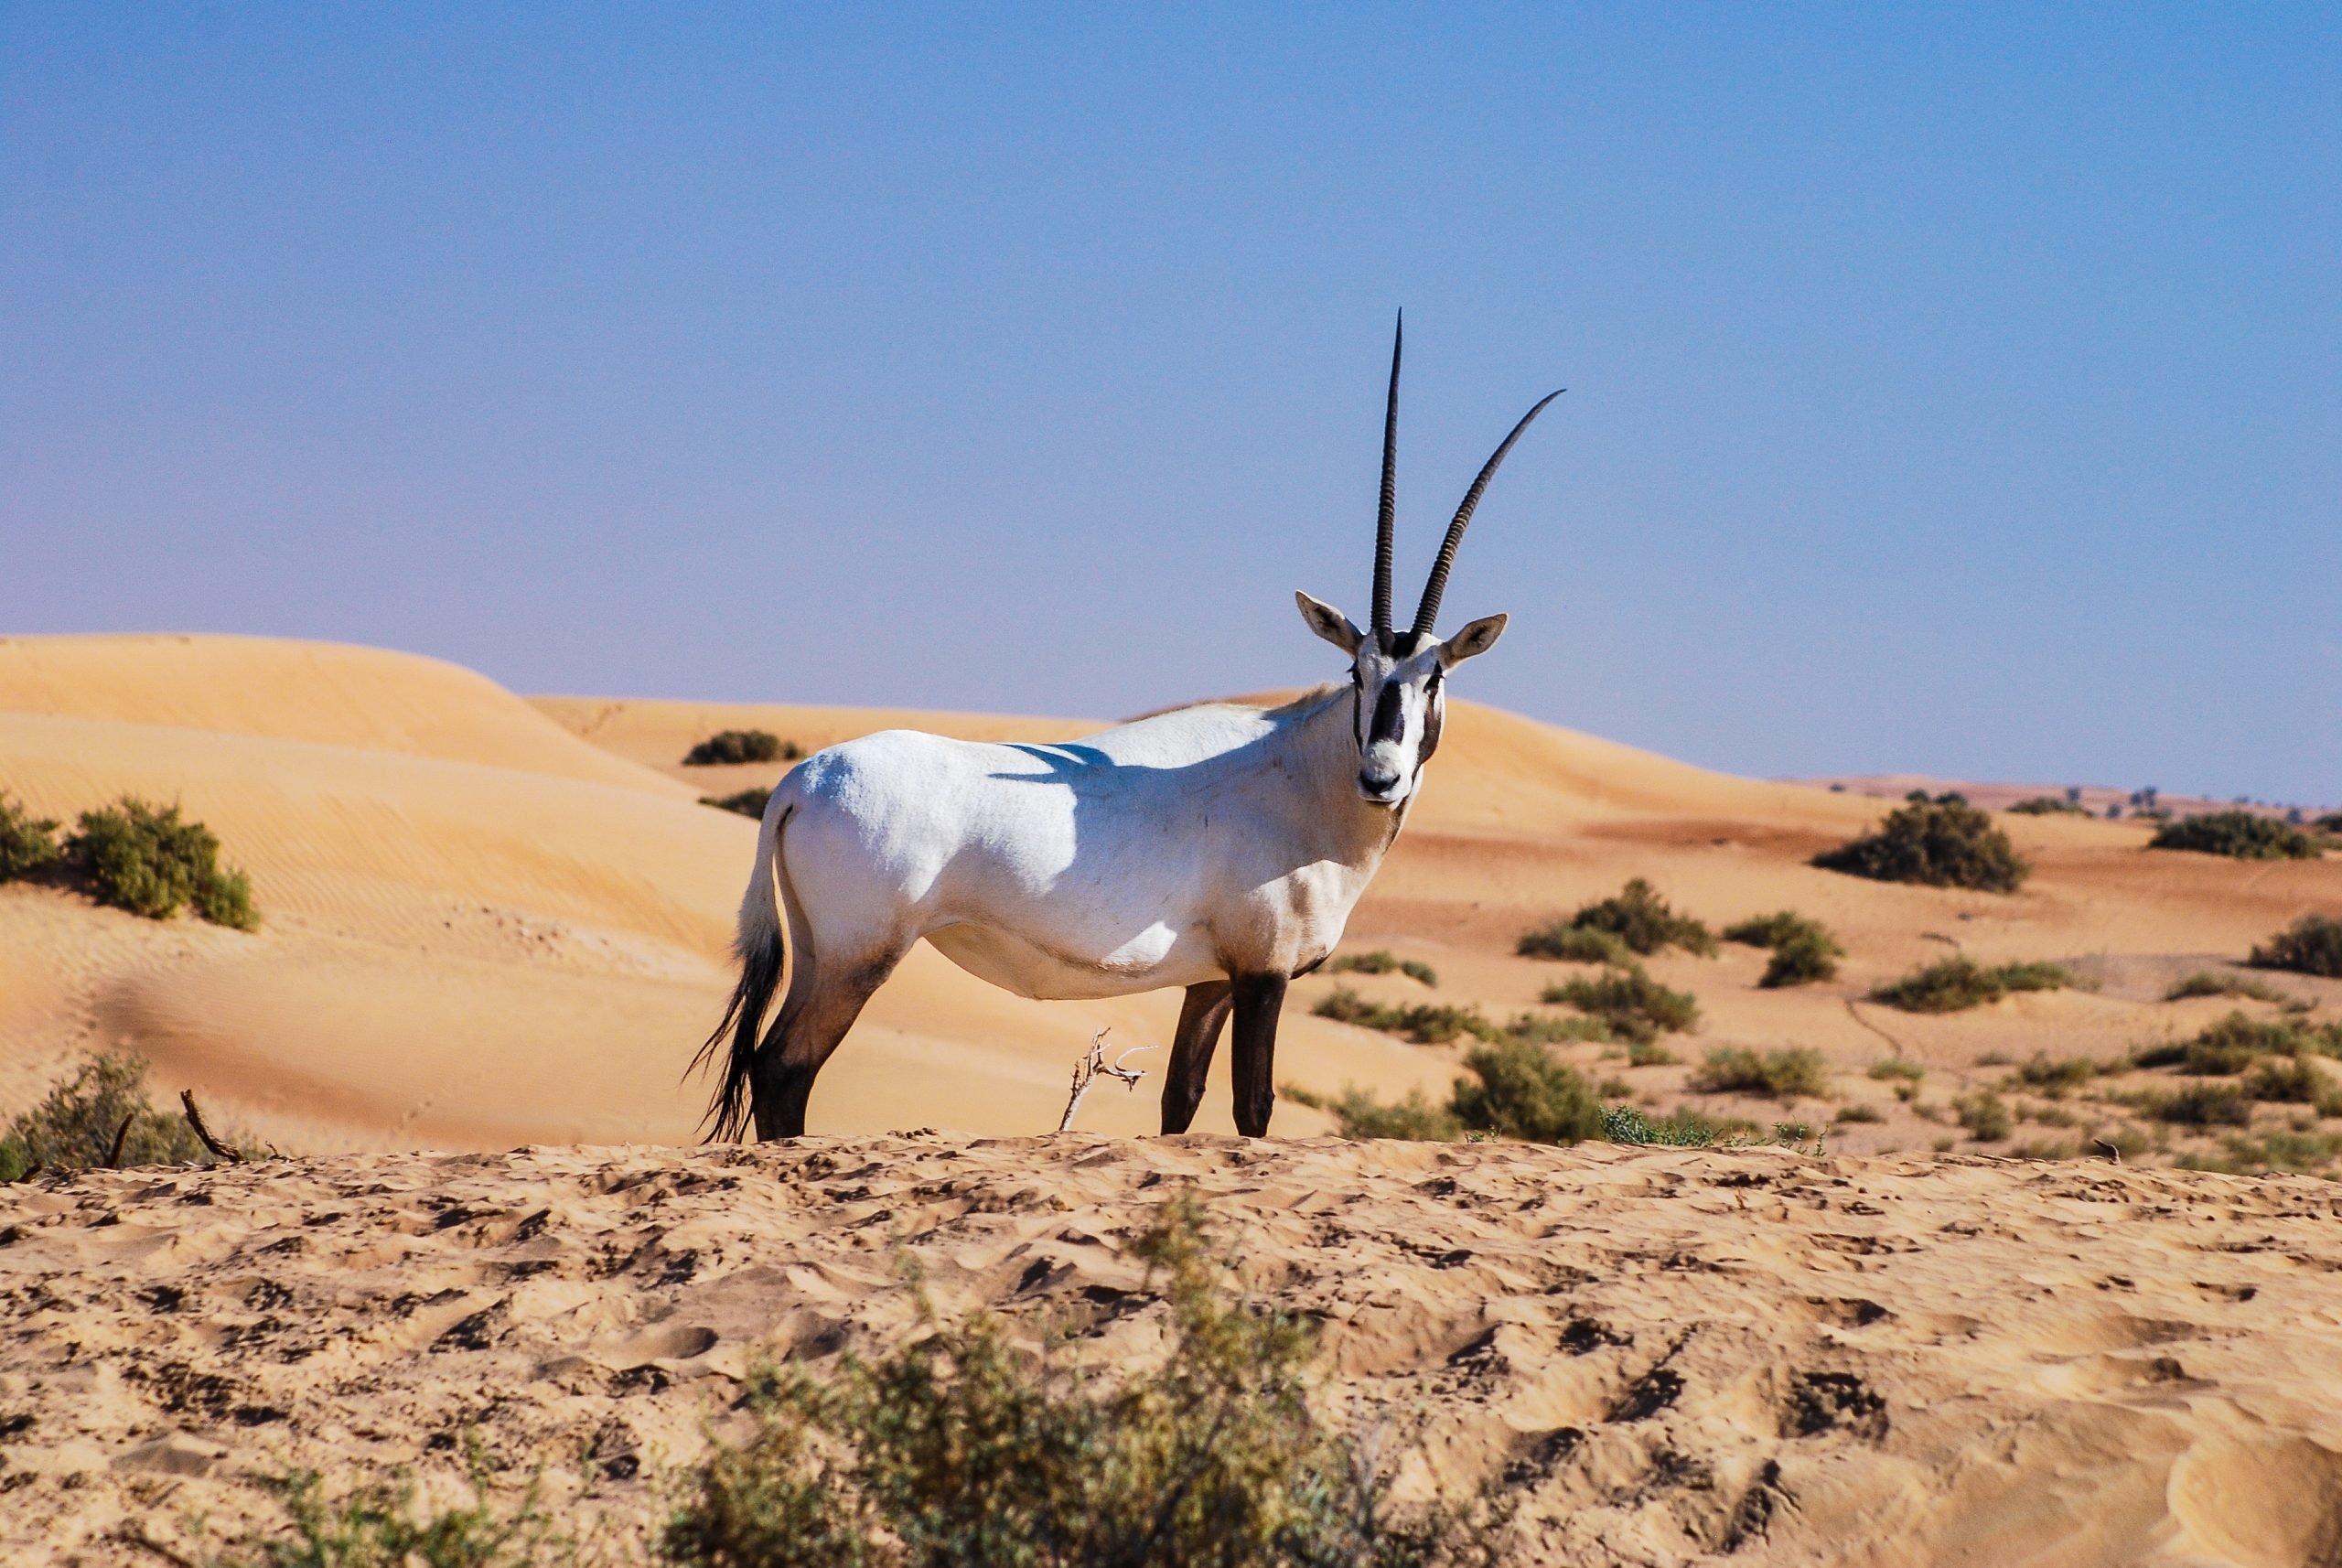 Arabian oryx facts